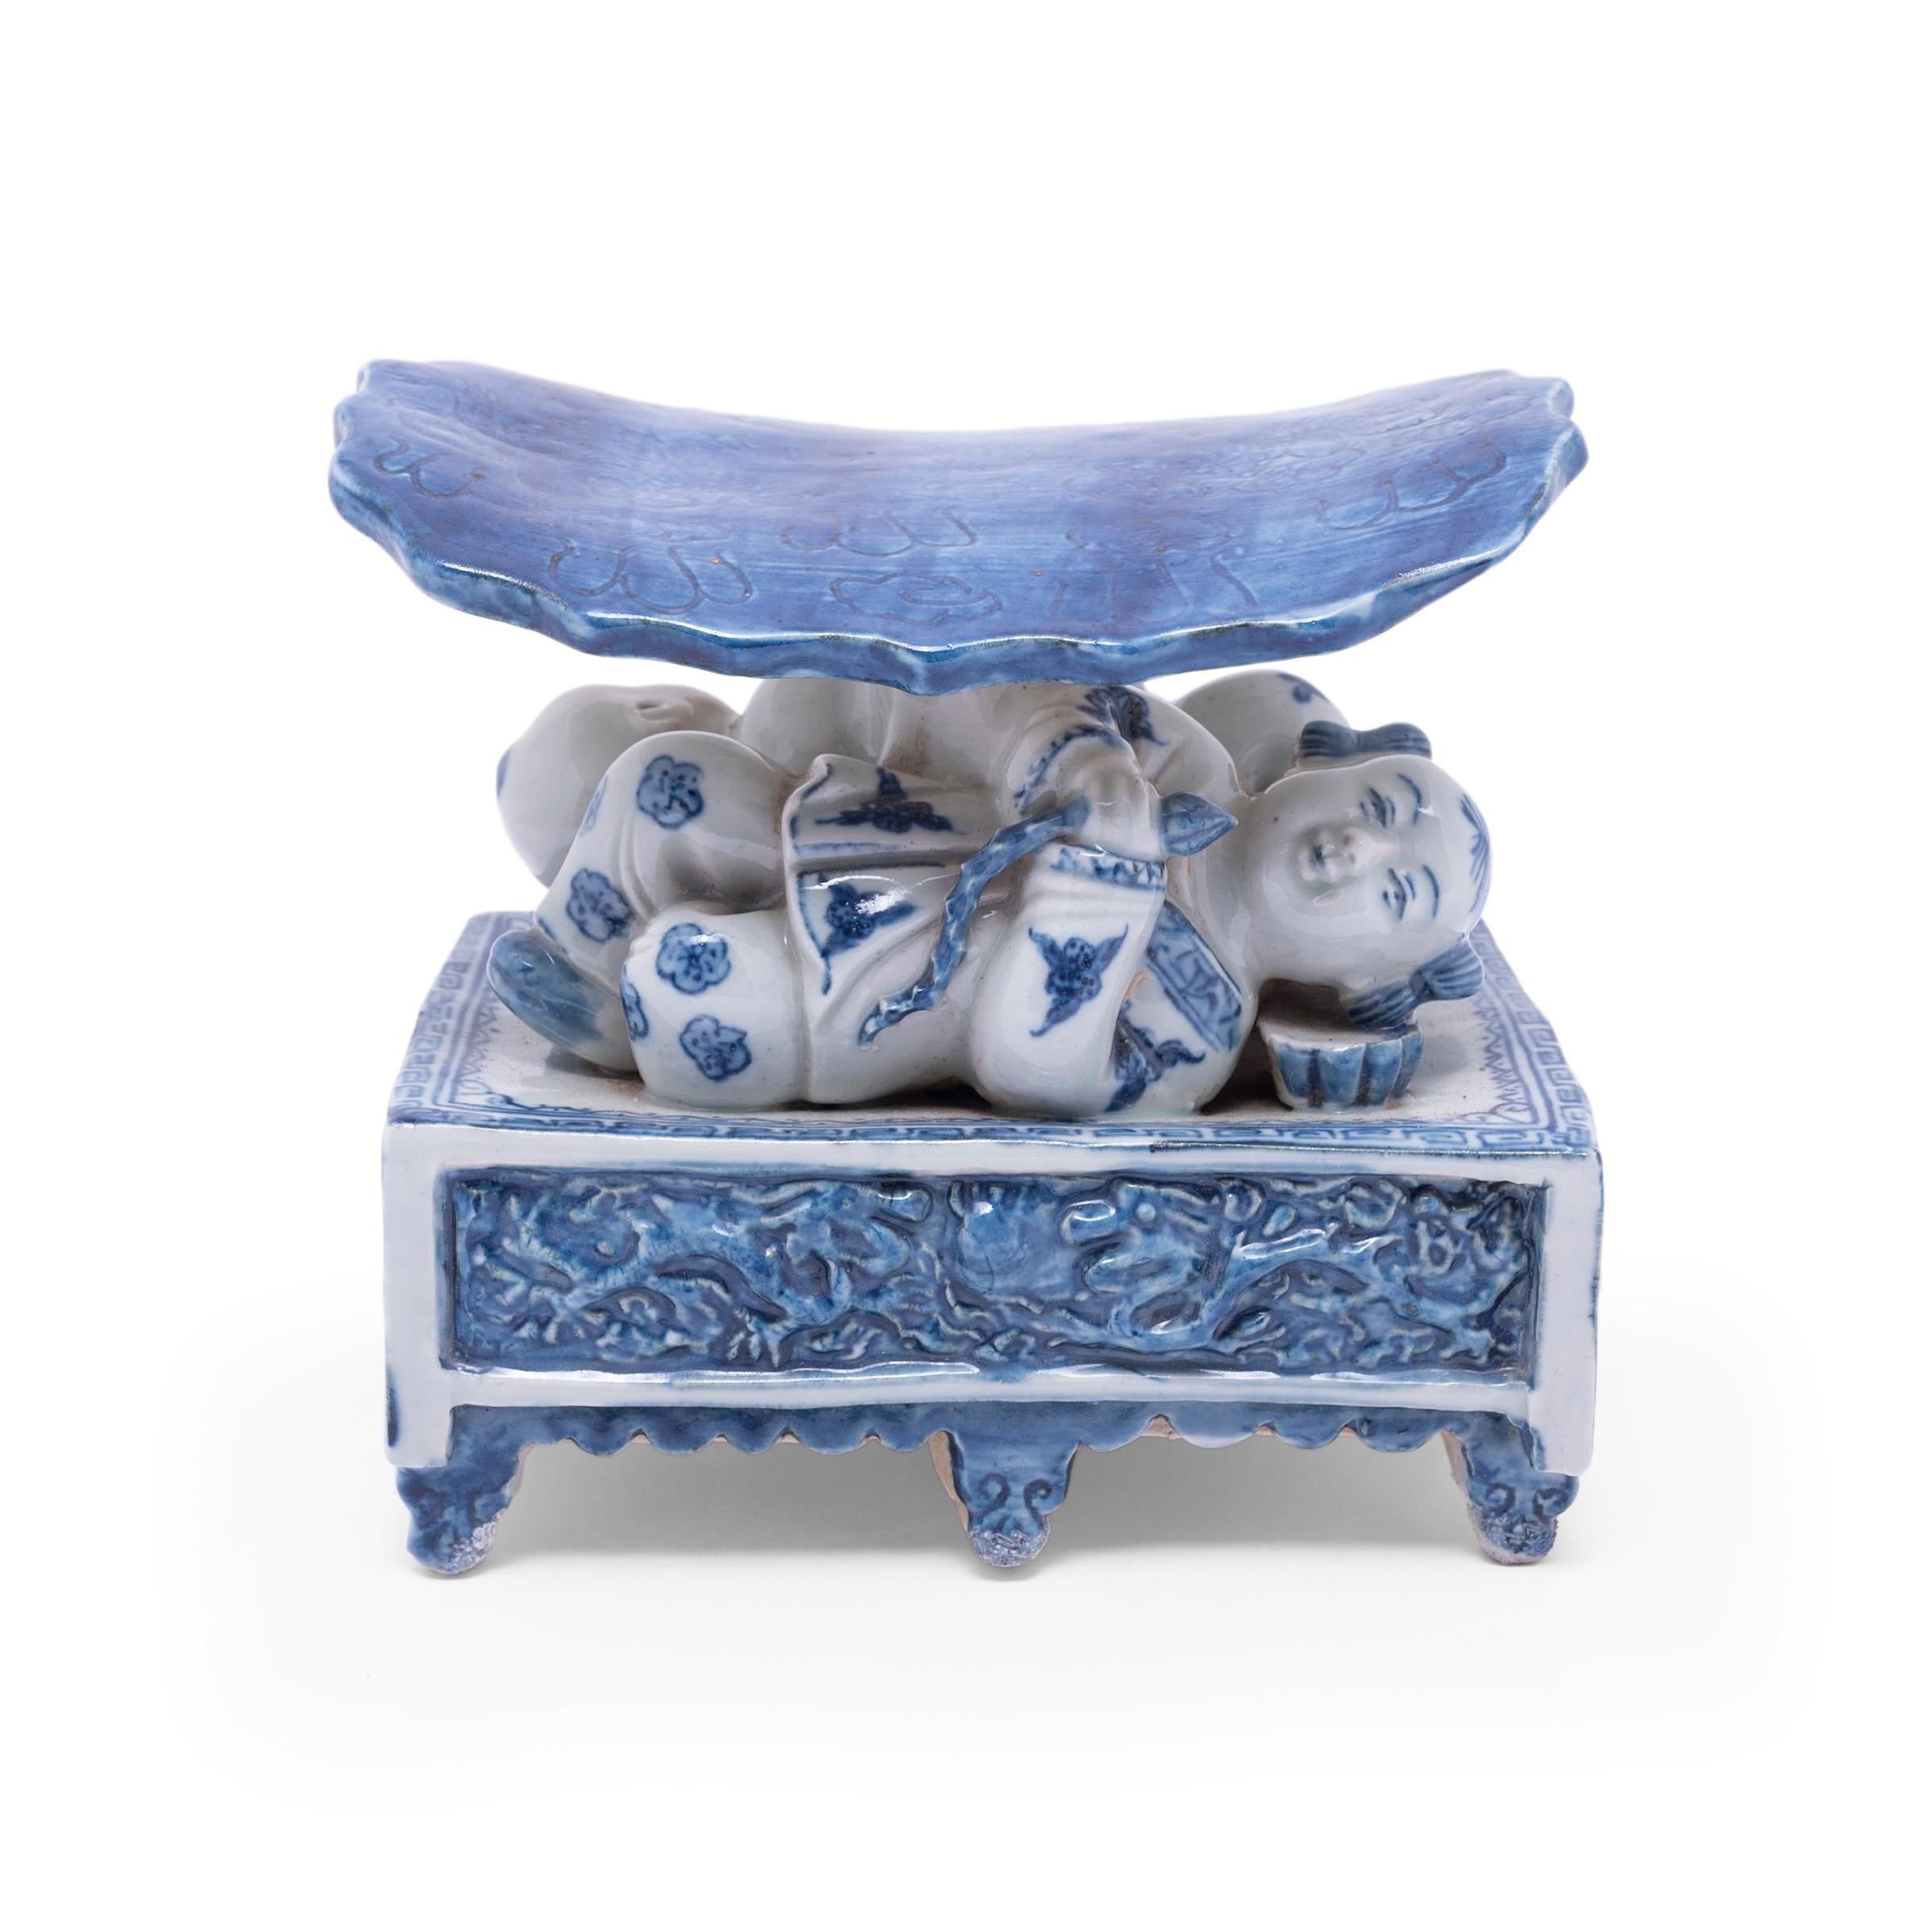 Glazed Chinese Blue and White Lotus Headrest, c. 1900